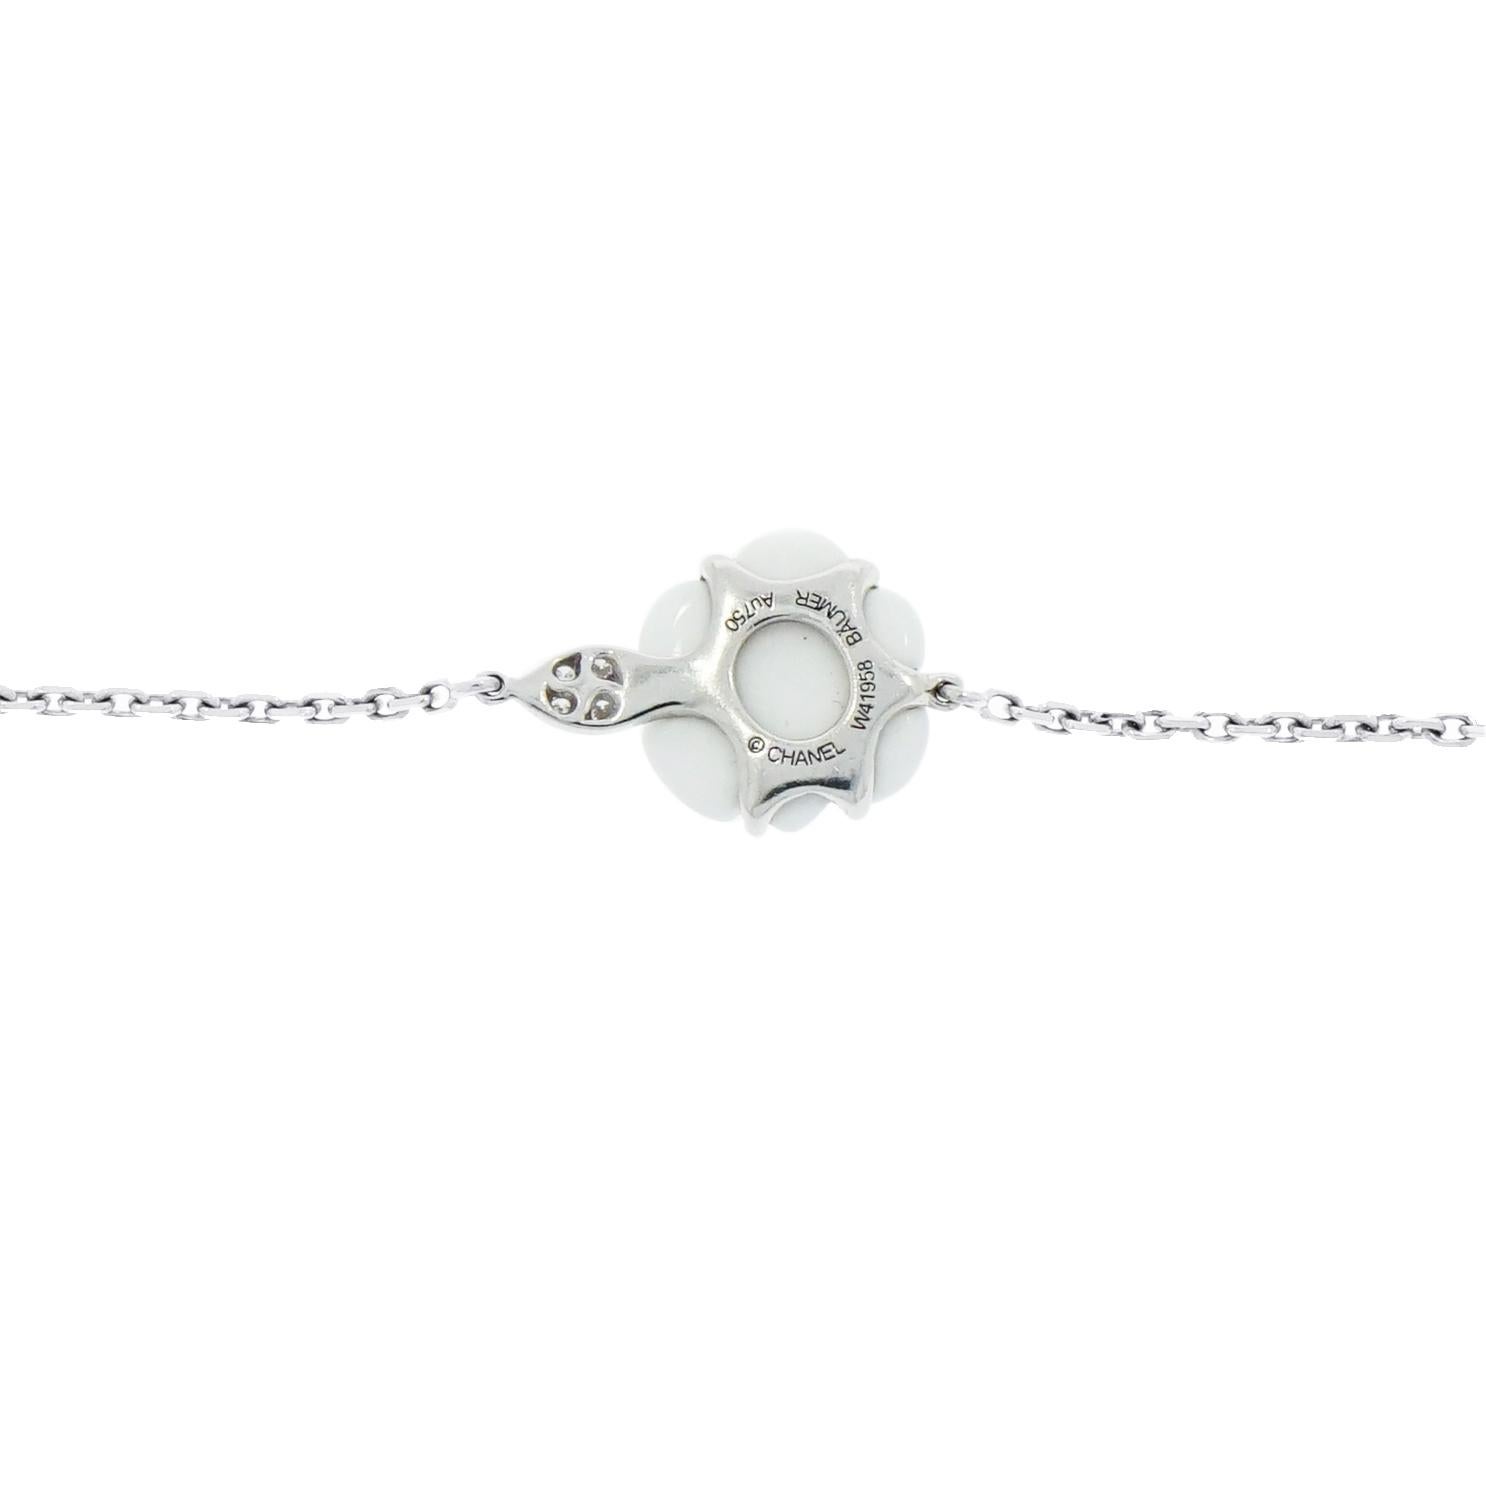 Romantic Chanel Camelia White Agate and Diamond White Gold Bracelet